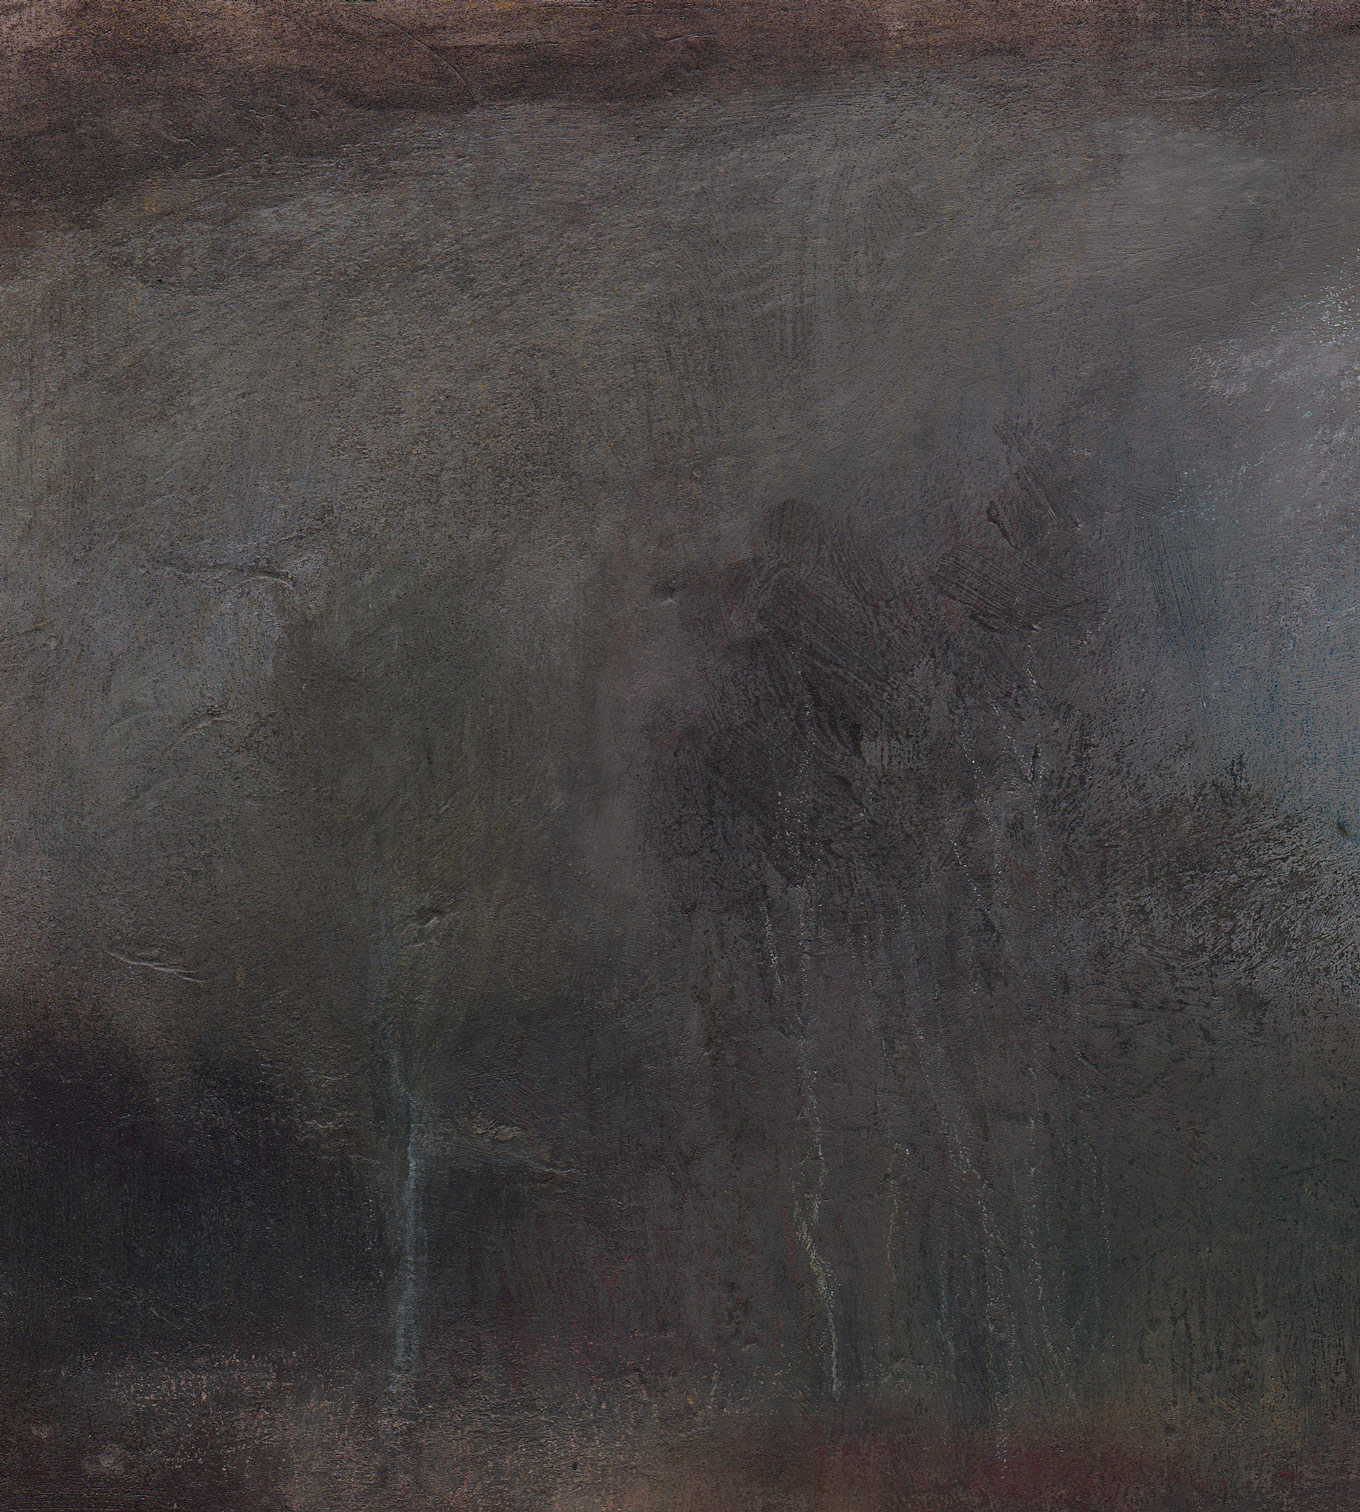 L1192 - Nicholas Herbert, British Artist, mixed media landscape painting of Chobham Common, mixed media on paper,2020